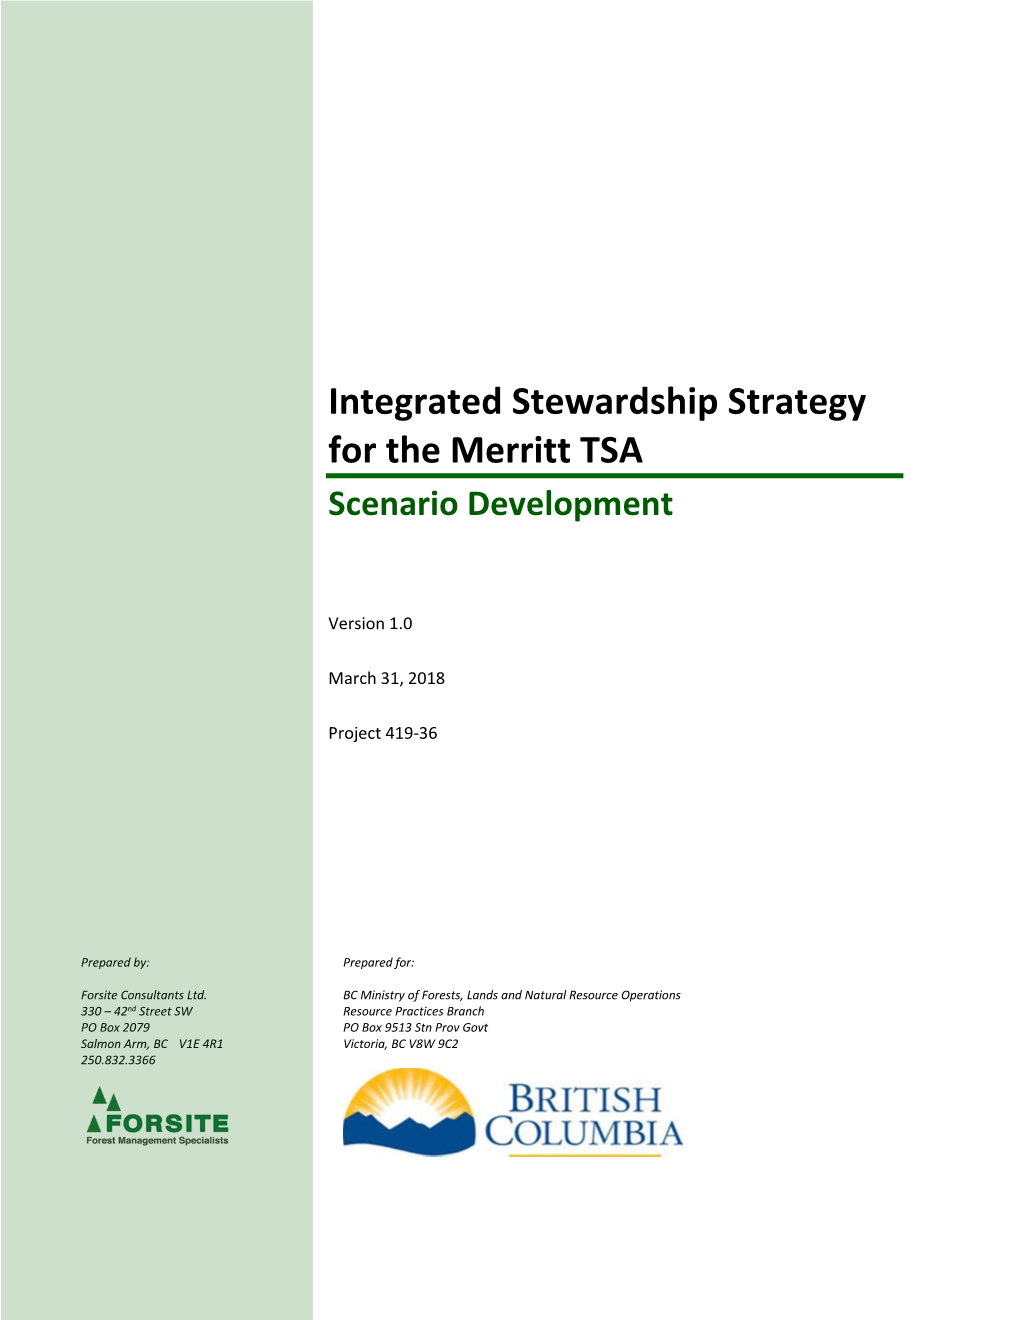 Integrated Stewardship Strategy for the Merritt TSA Scenario Development